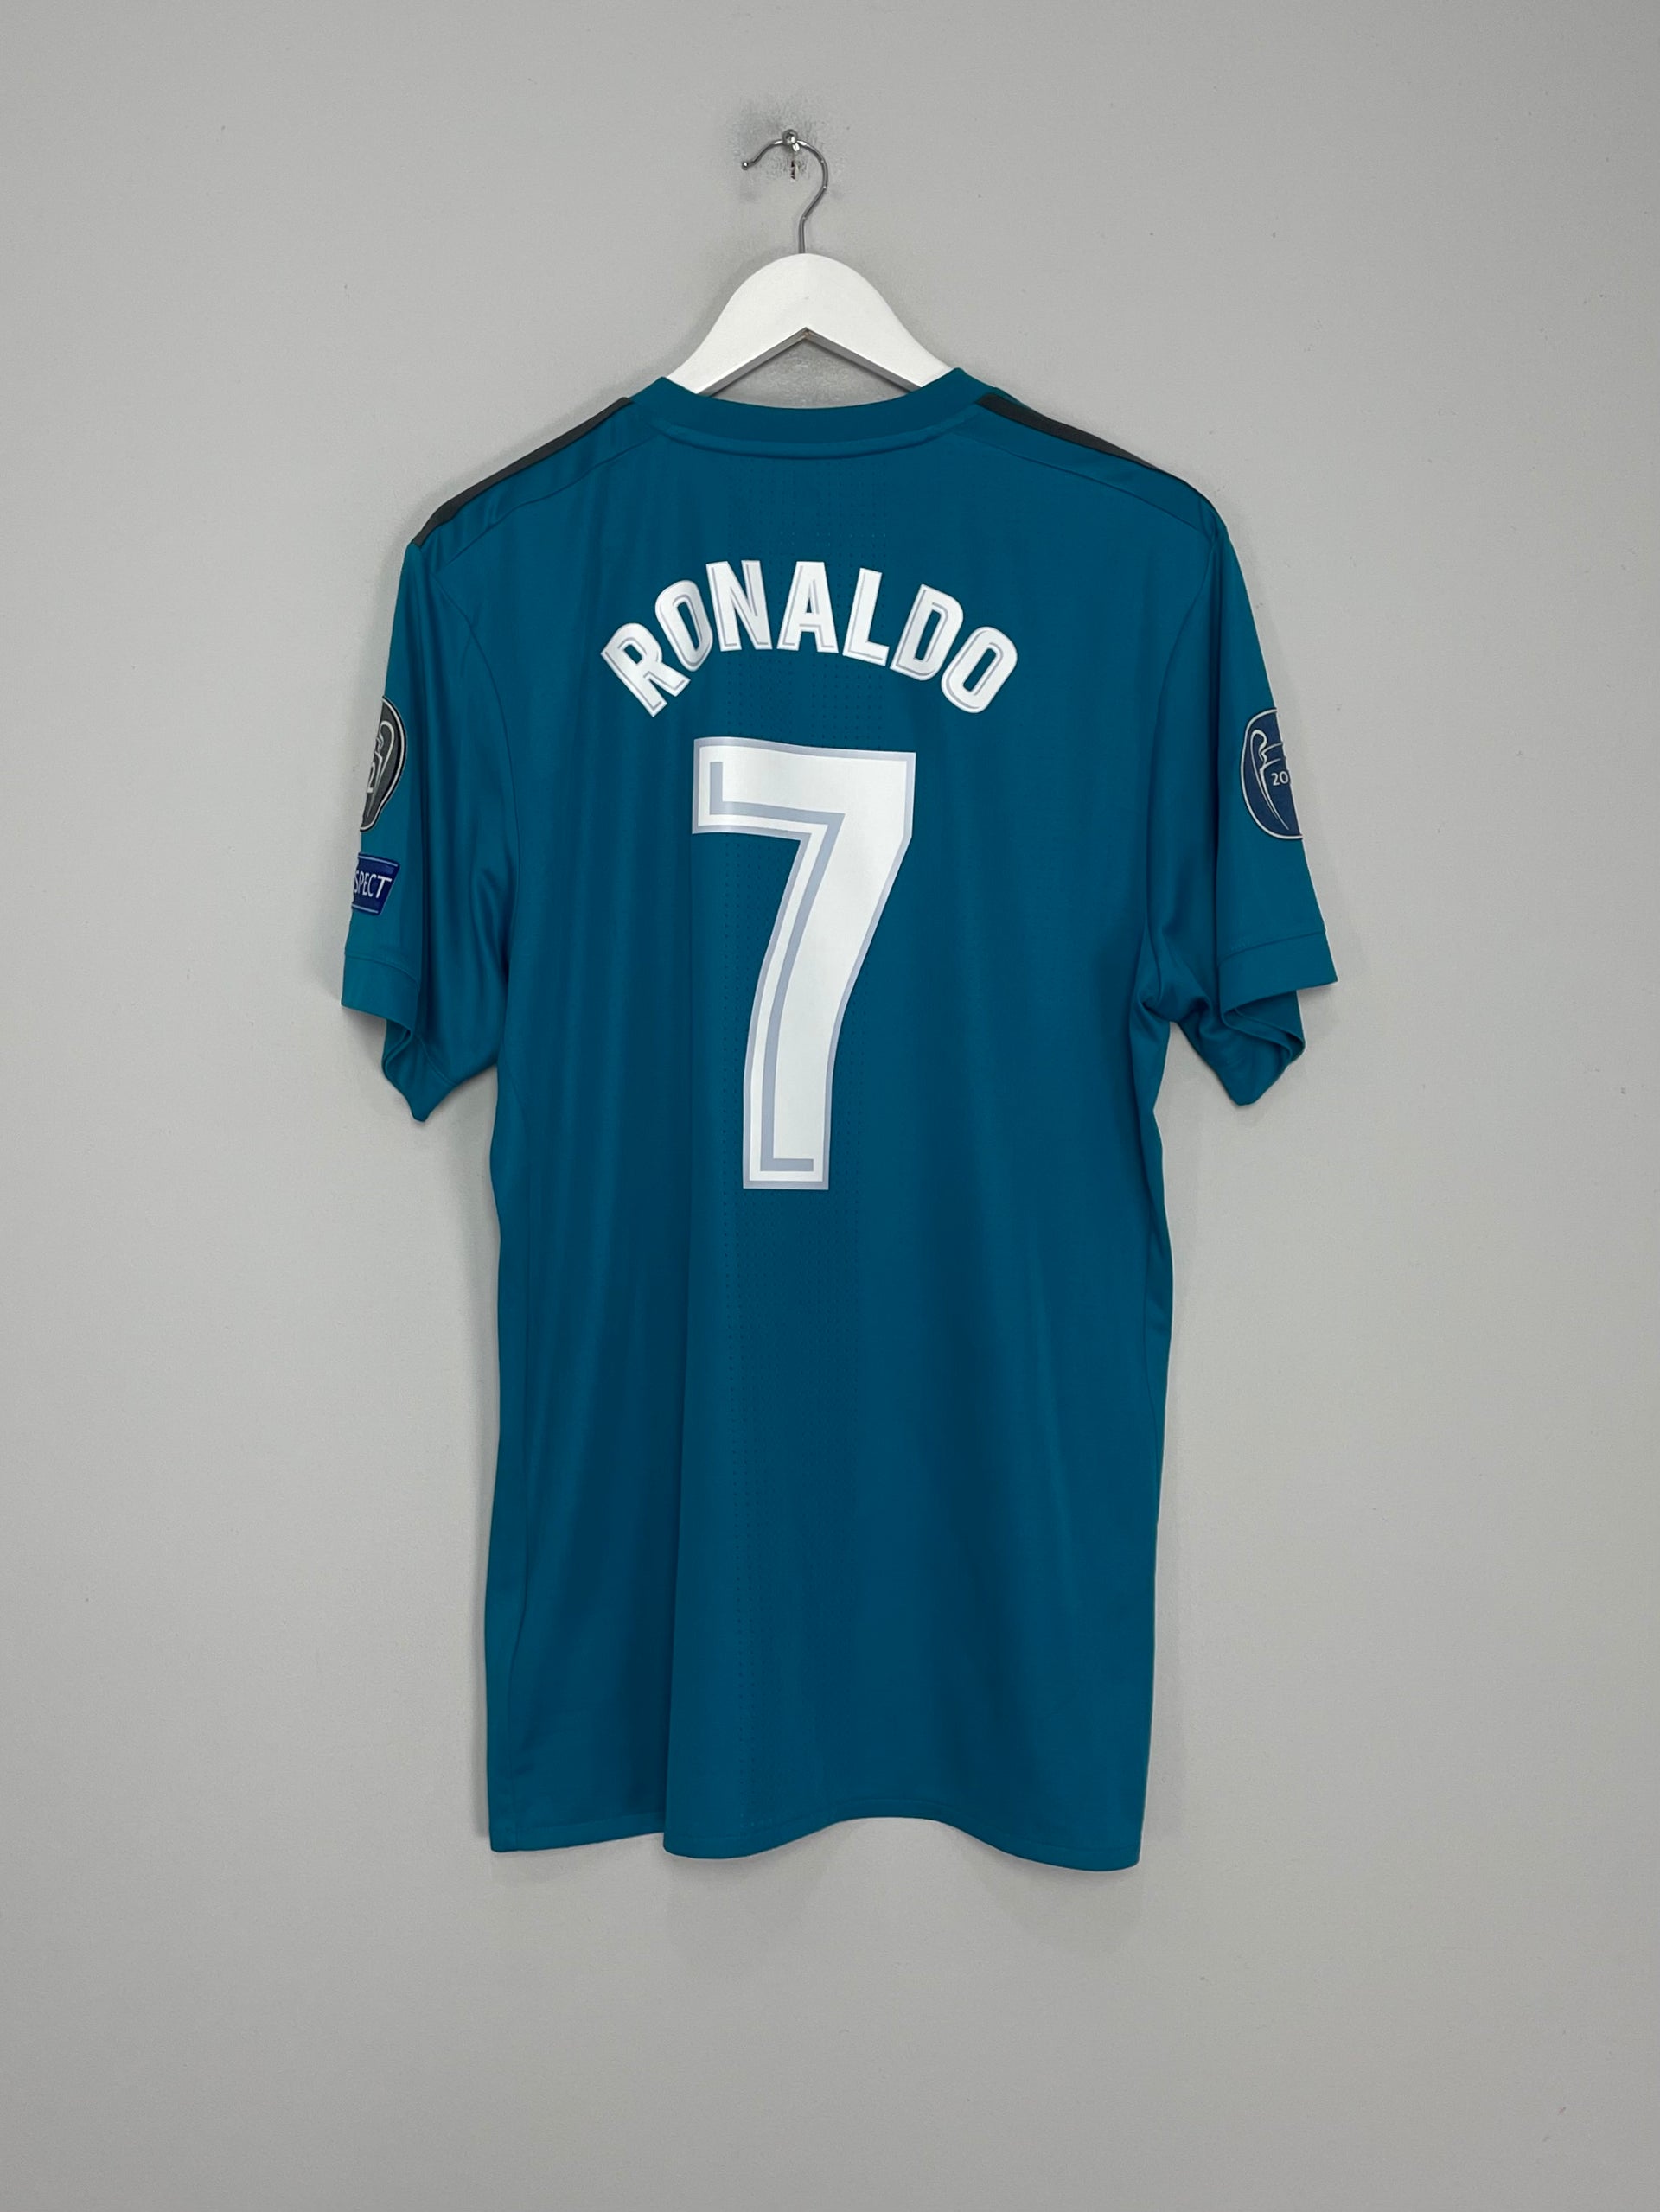 Camiseta del Real Madrid 2017-2018 Local + Ronaldo 7 (Dorsal Oficial) # ronaldo #cr7 #realmadrid #shirt #jer…